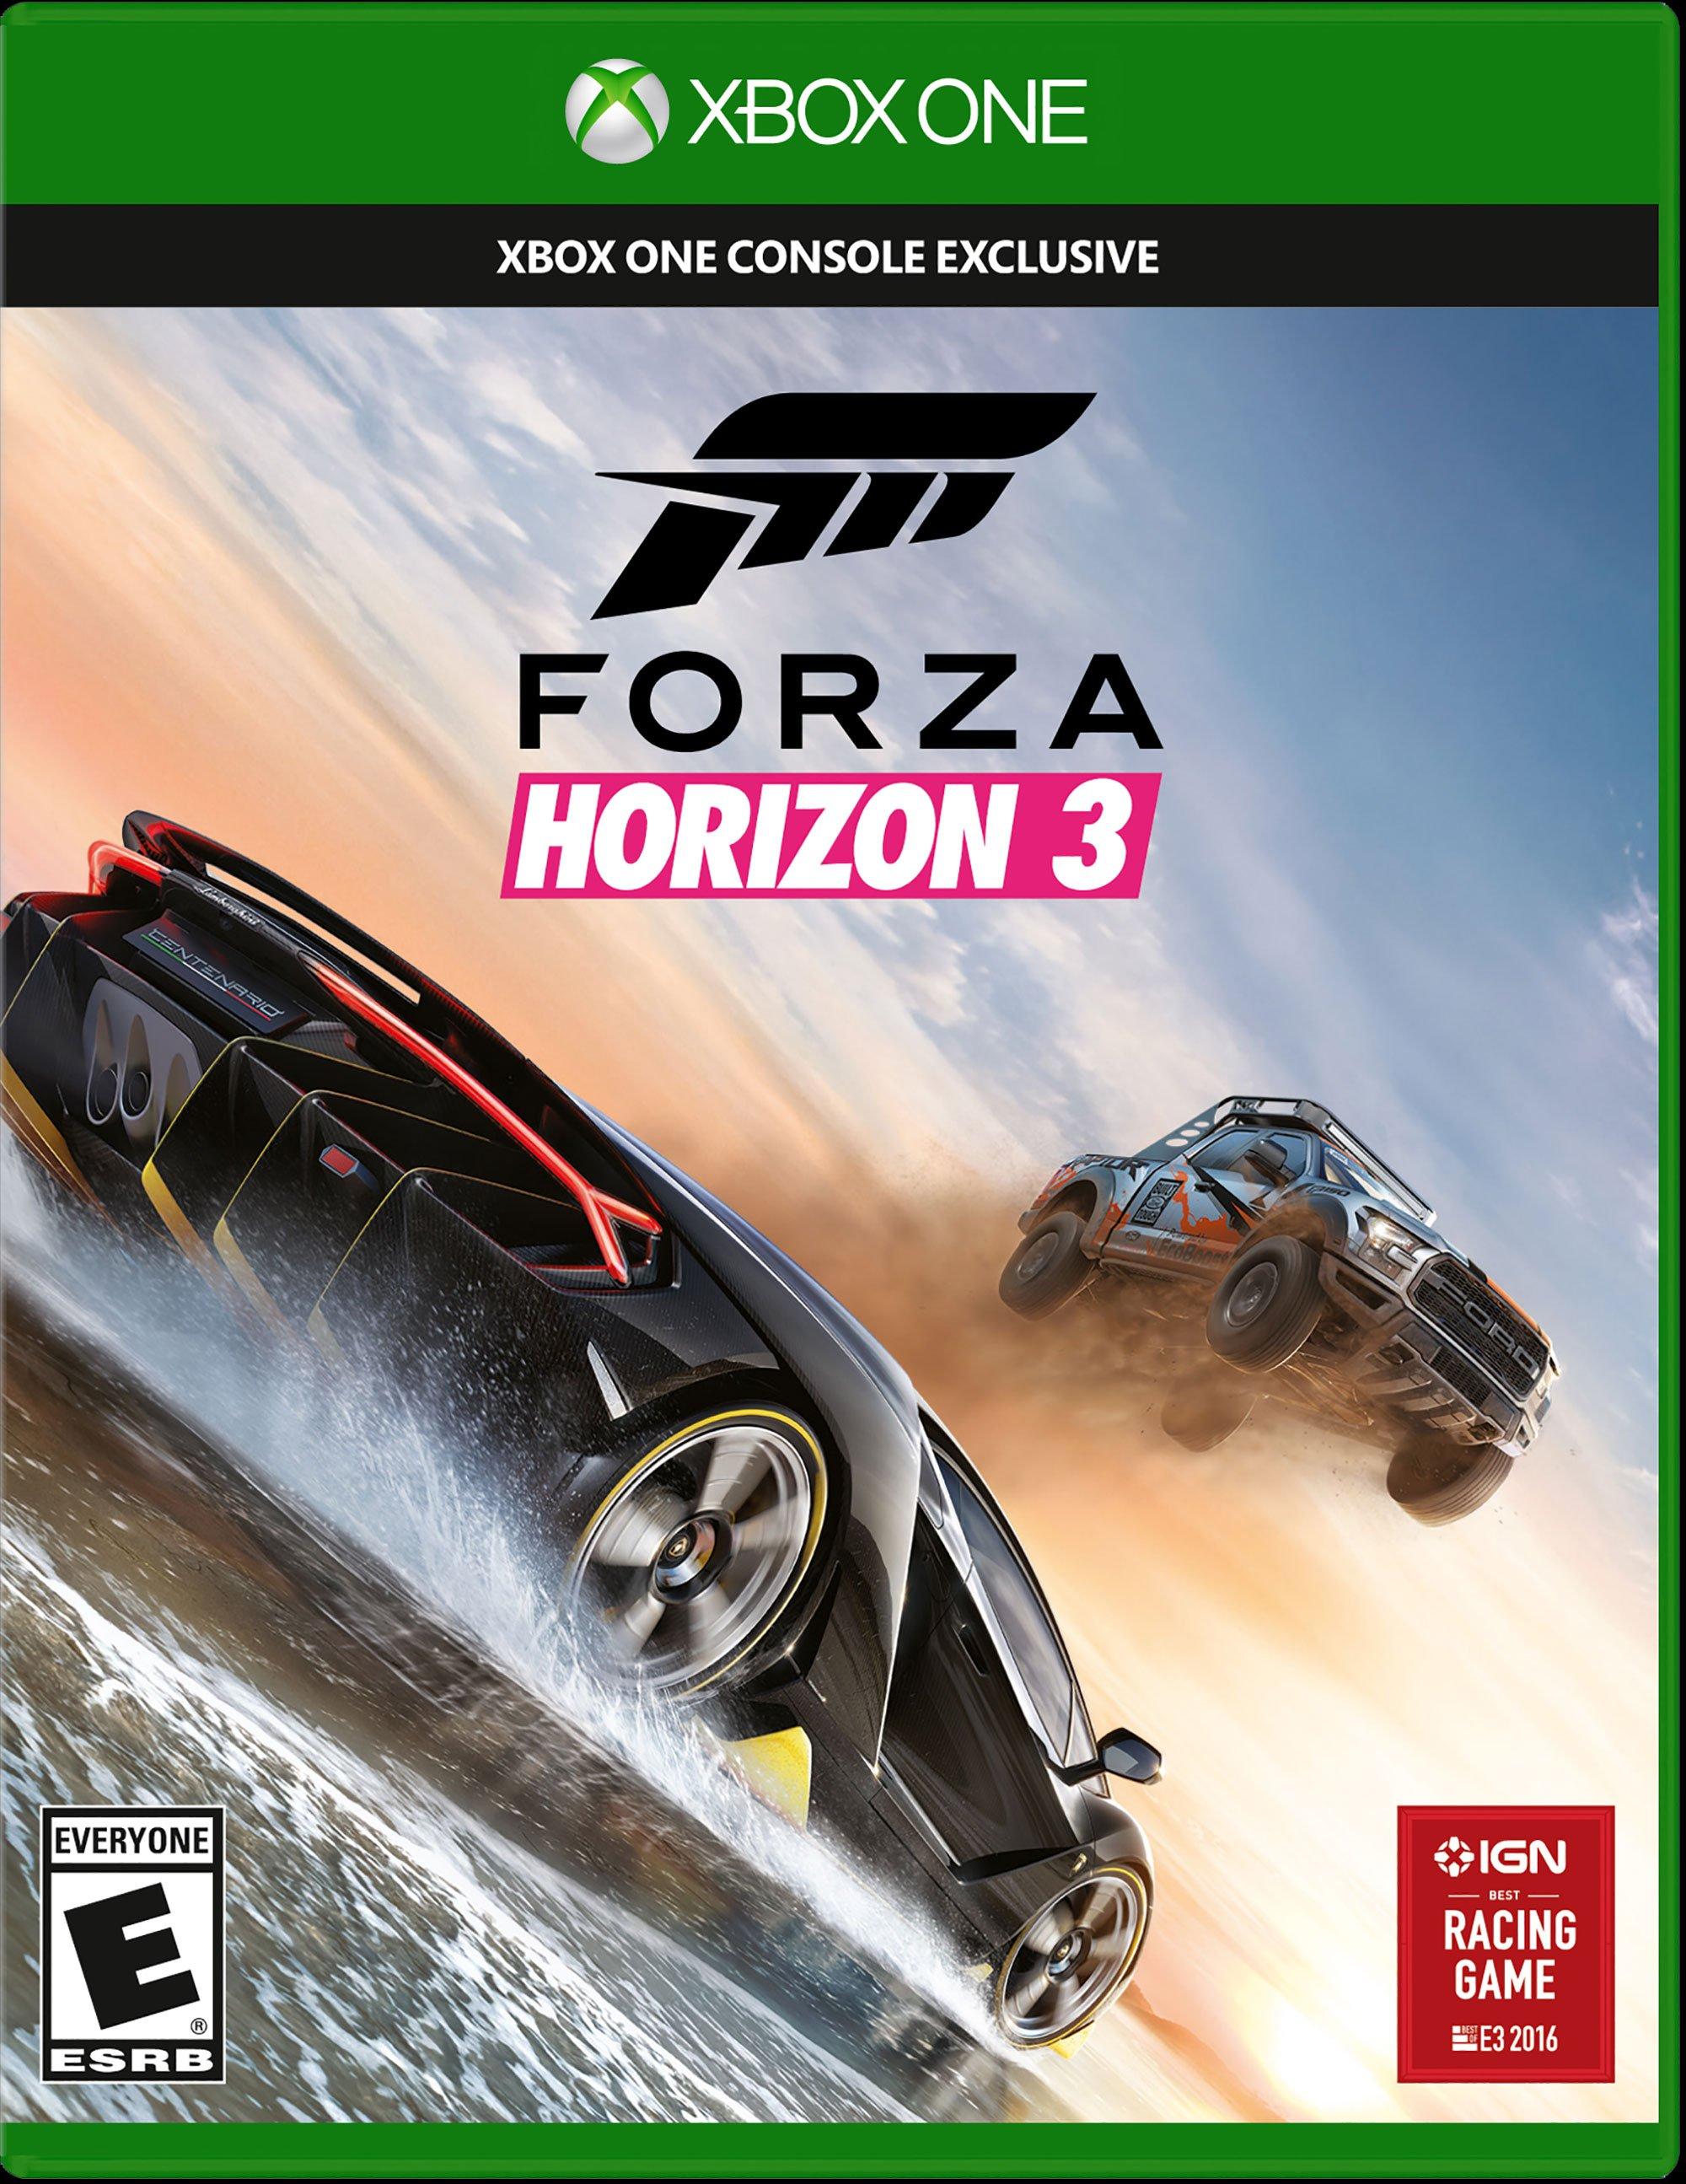 FORZA Horizon 1 Xbox 360 (works on Xbox One)